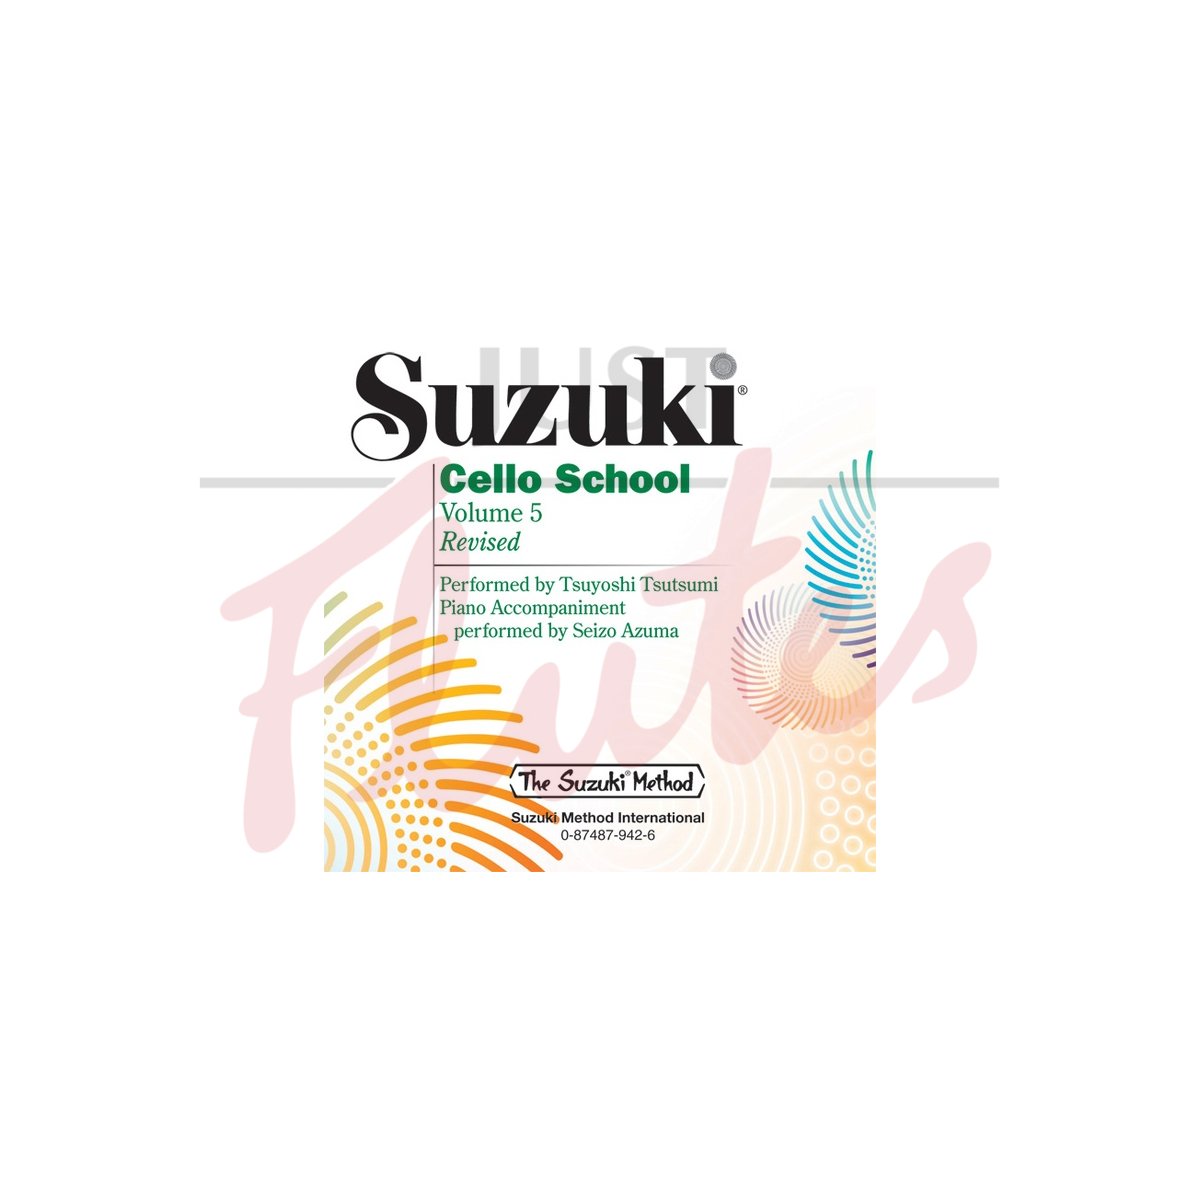 Suzuki Cello School Volume 5 CD